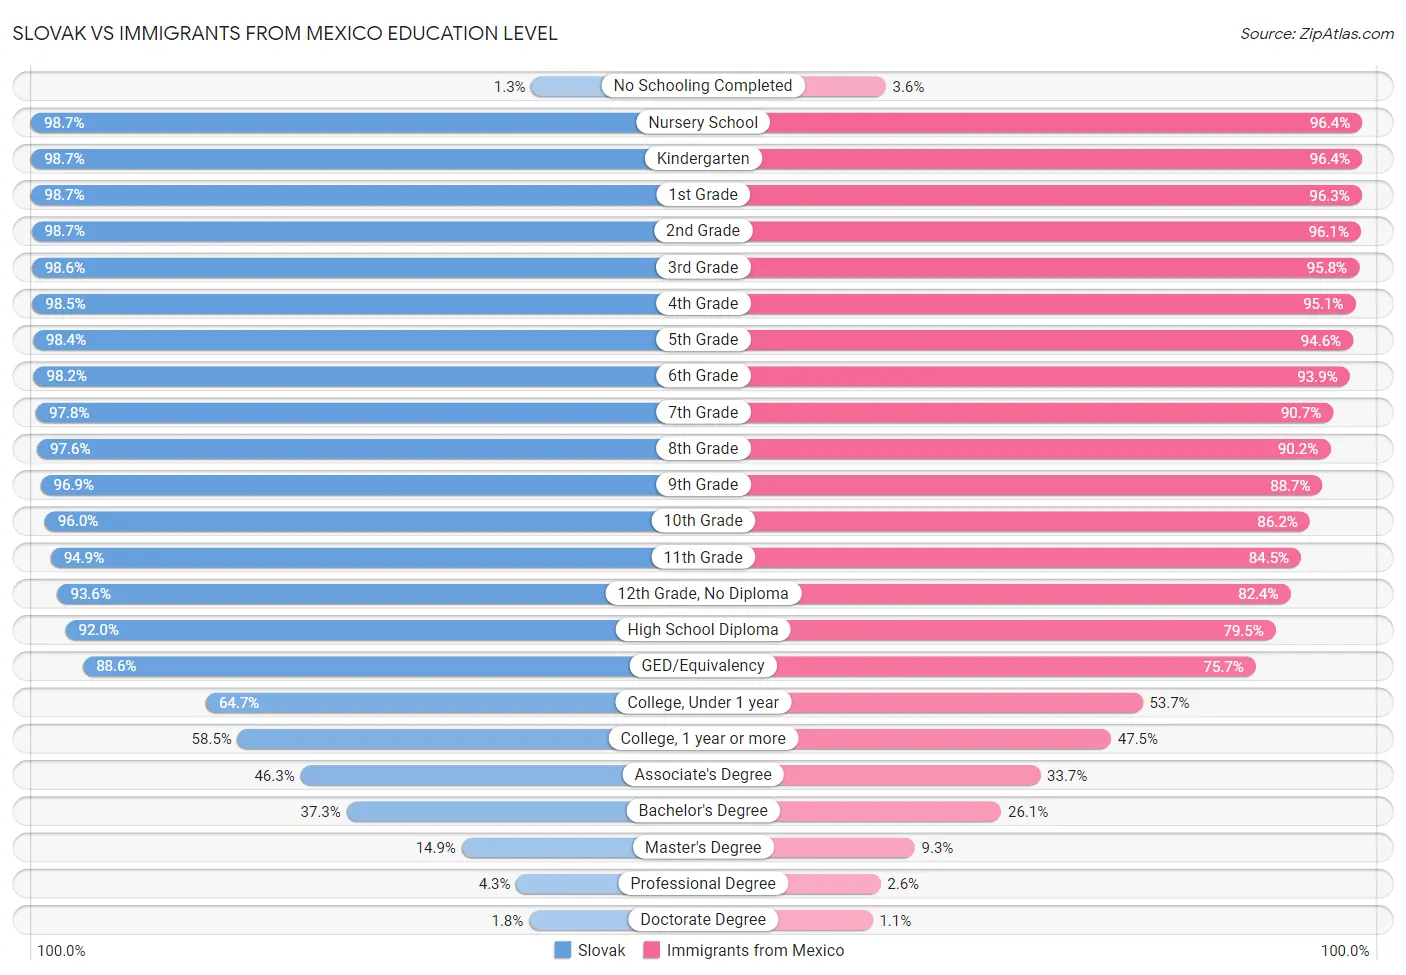 Slovak vs Immigrants from Mexico Education Level